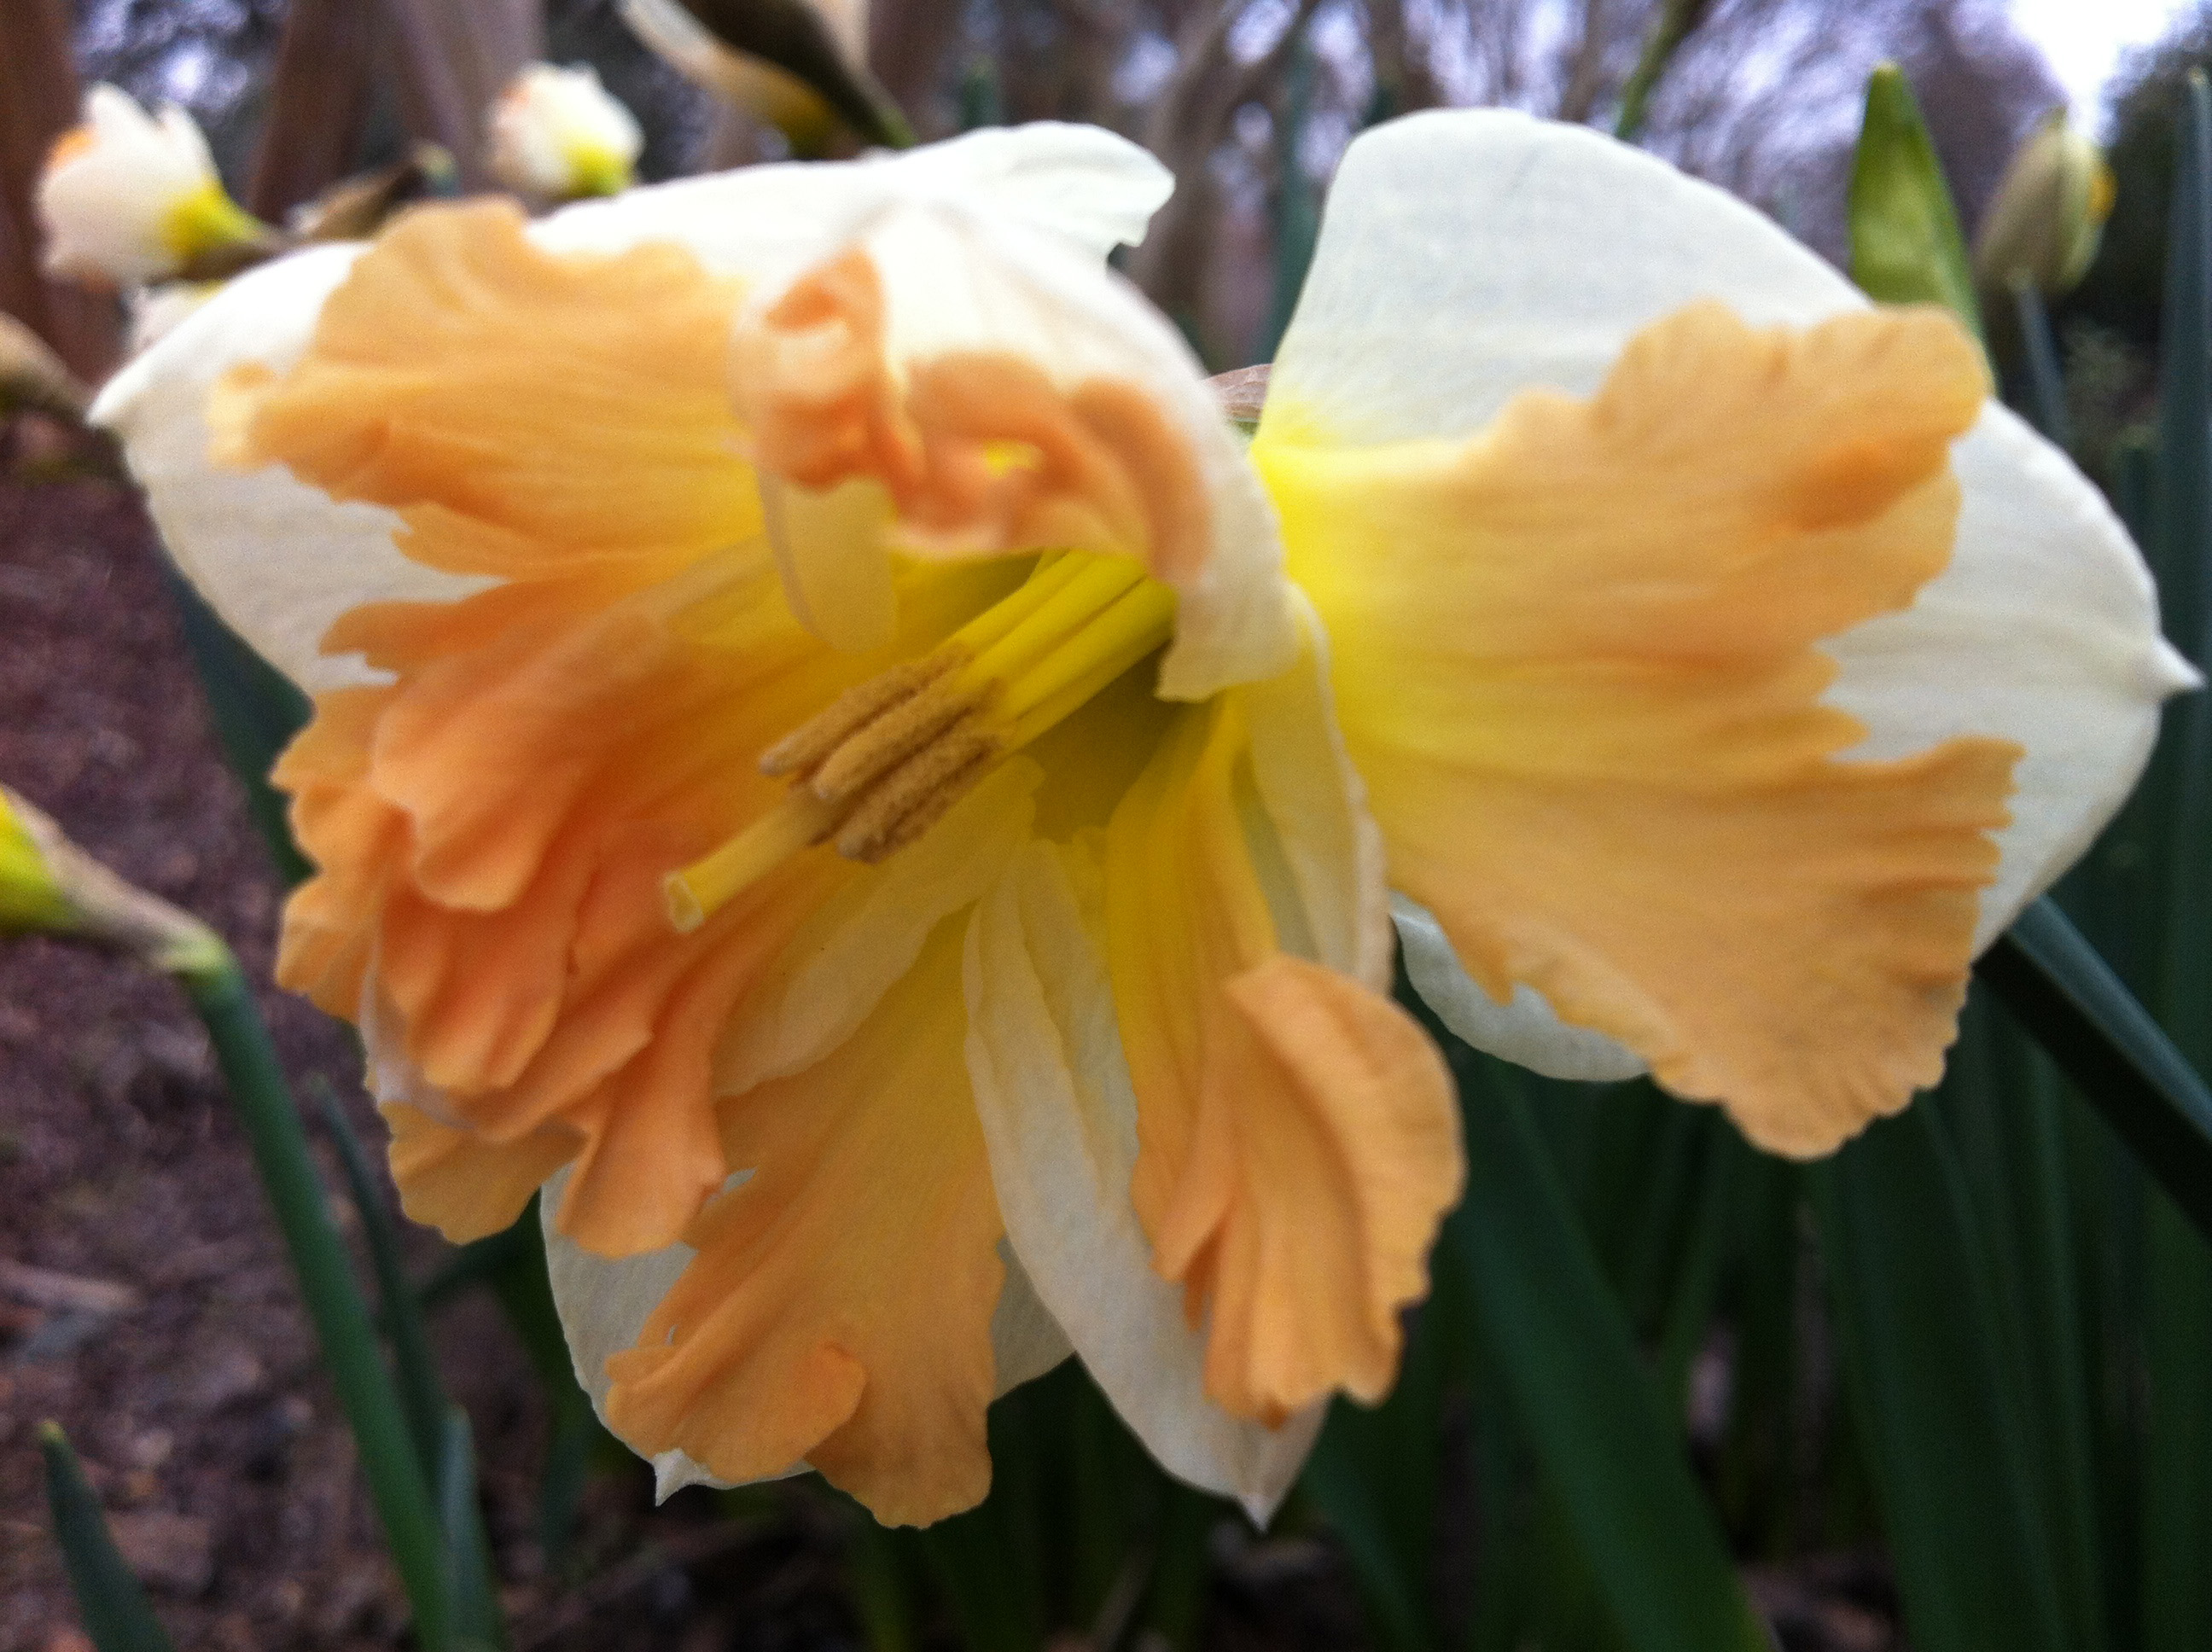 Narcissus 'Cum Laude' - Lewis Ginter Botanical Garden